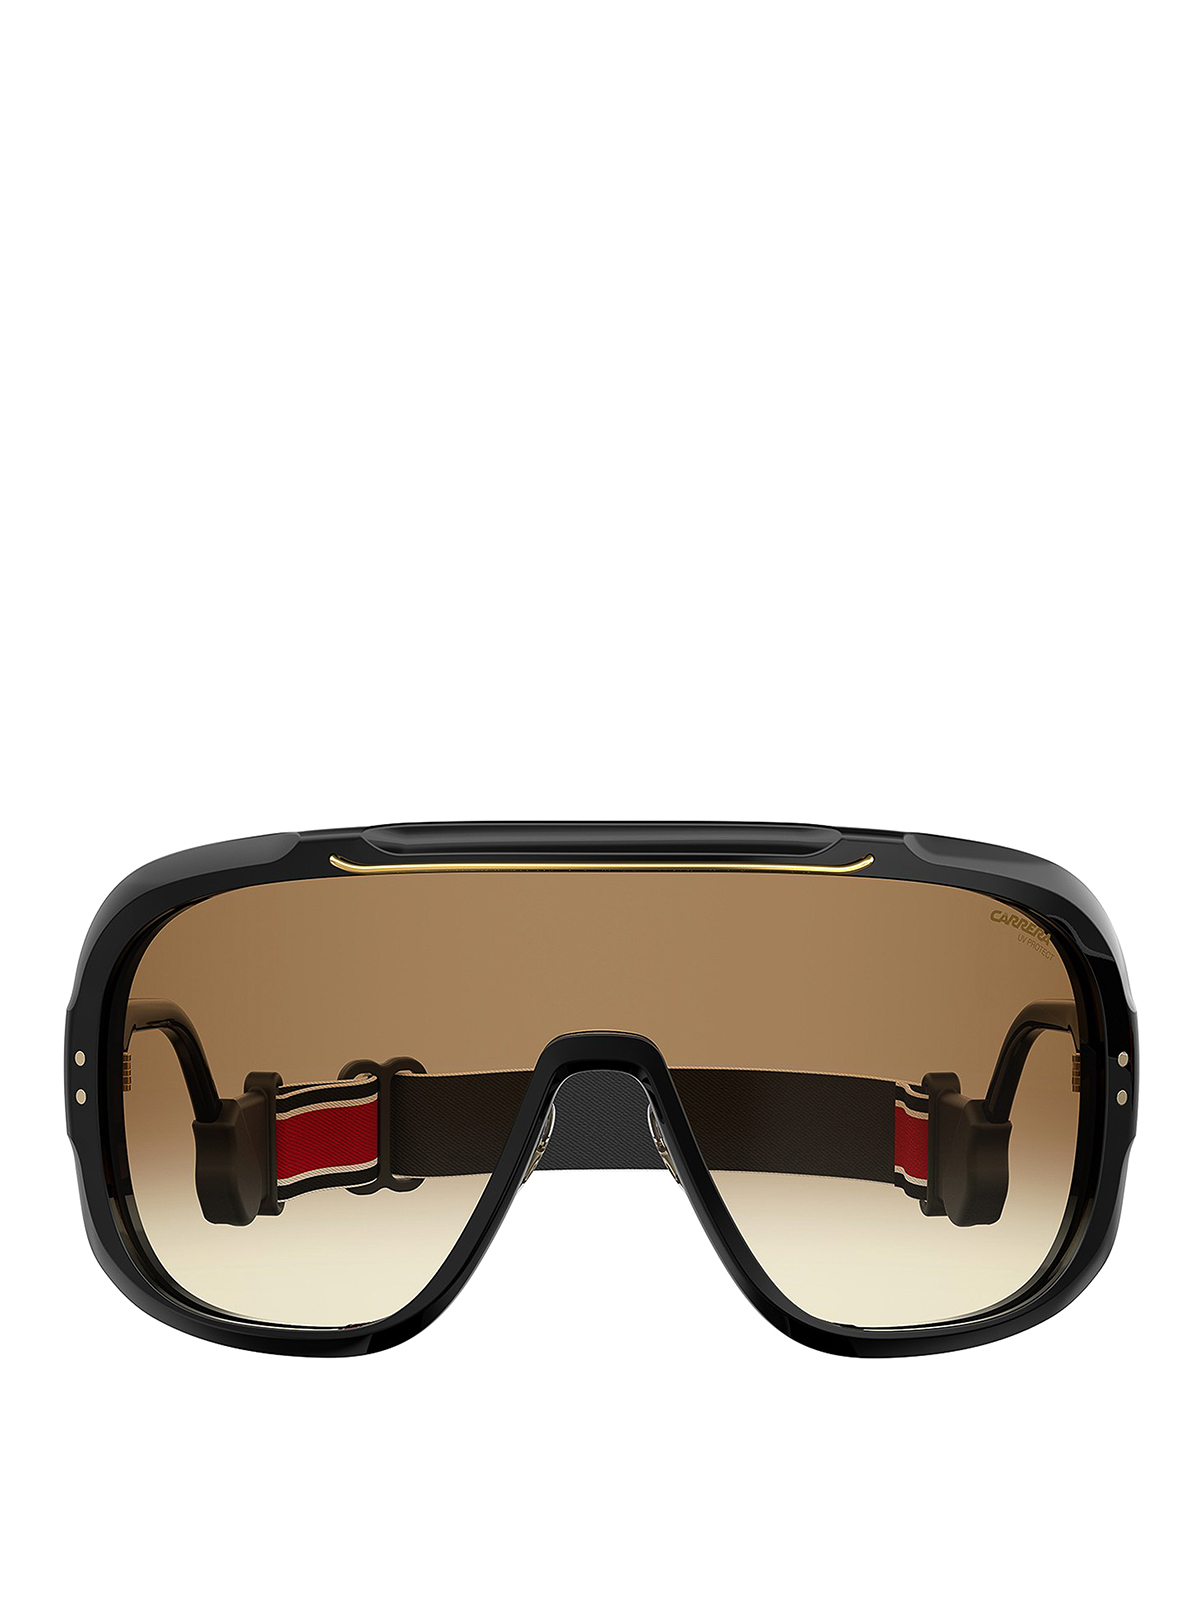 Sunglasses Carrera - Epica sunglasses - CARRERAEPICA80786 